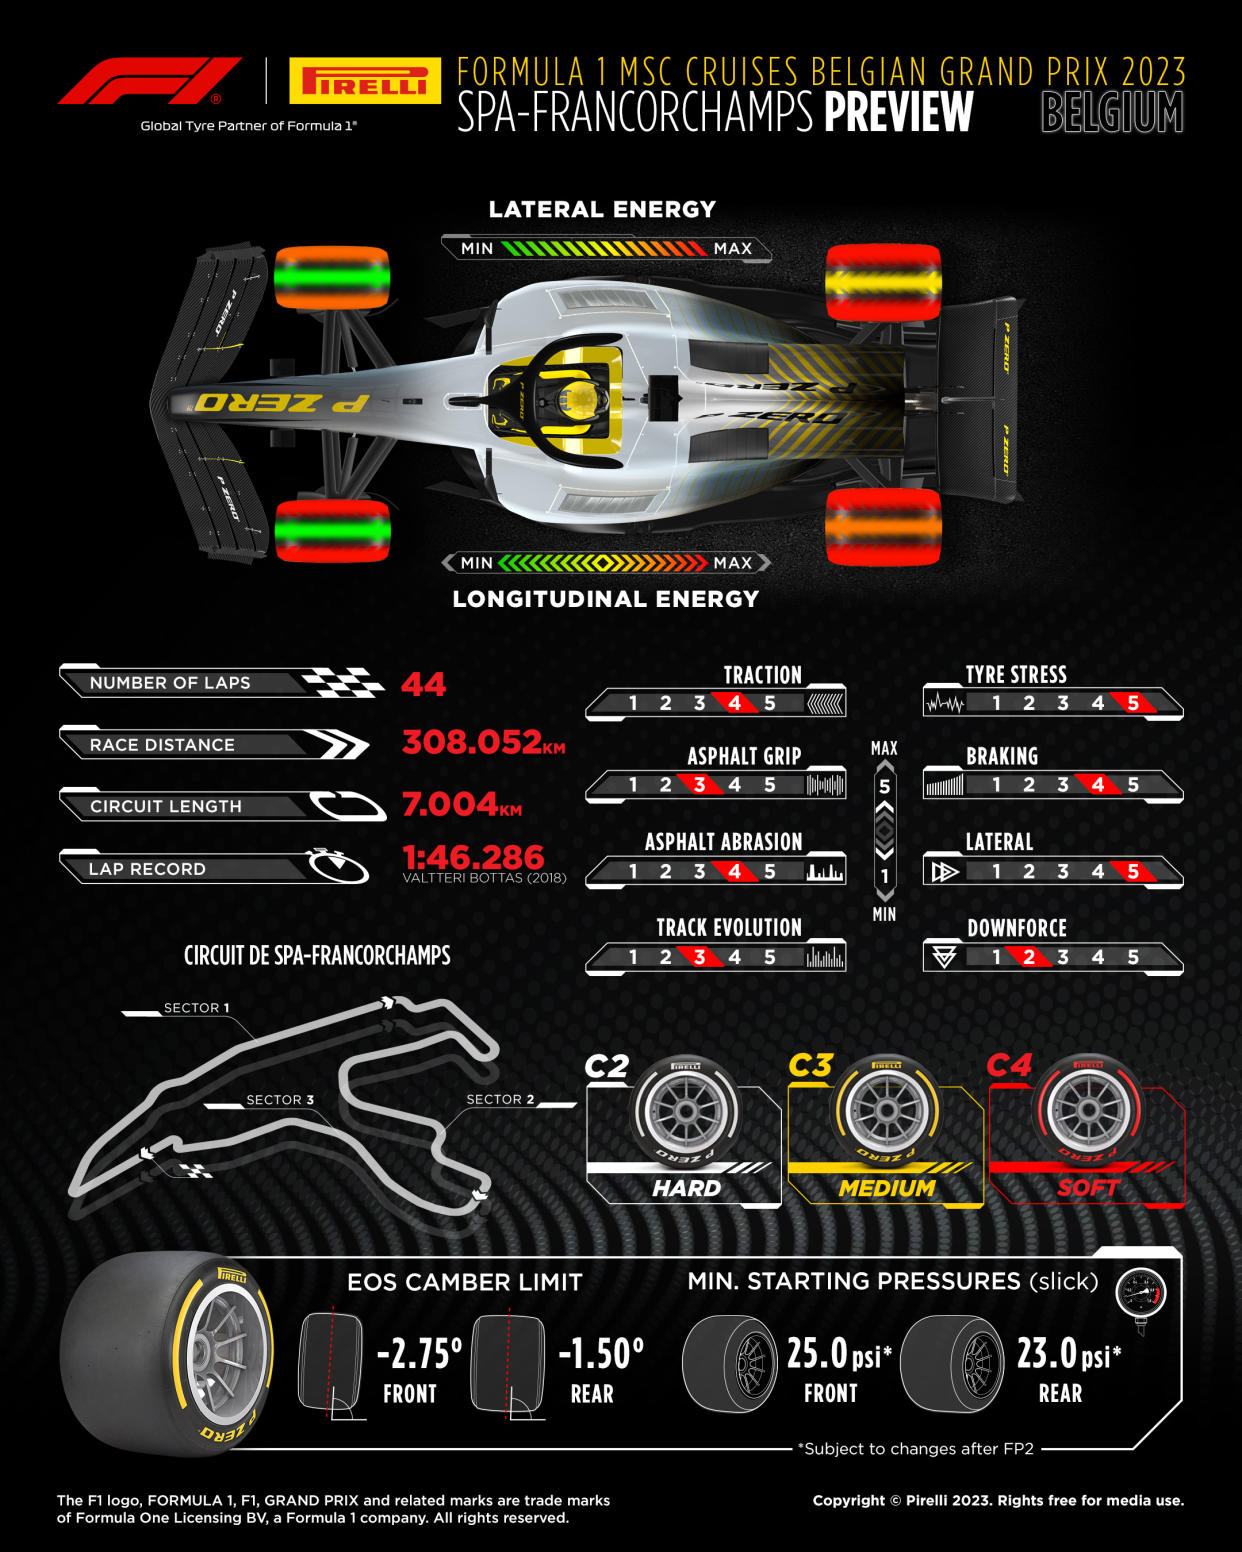 Pirelli's preview of the 2023 Belgian Grand Prix